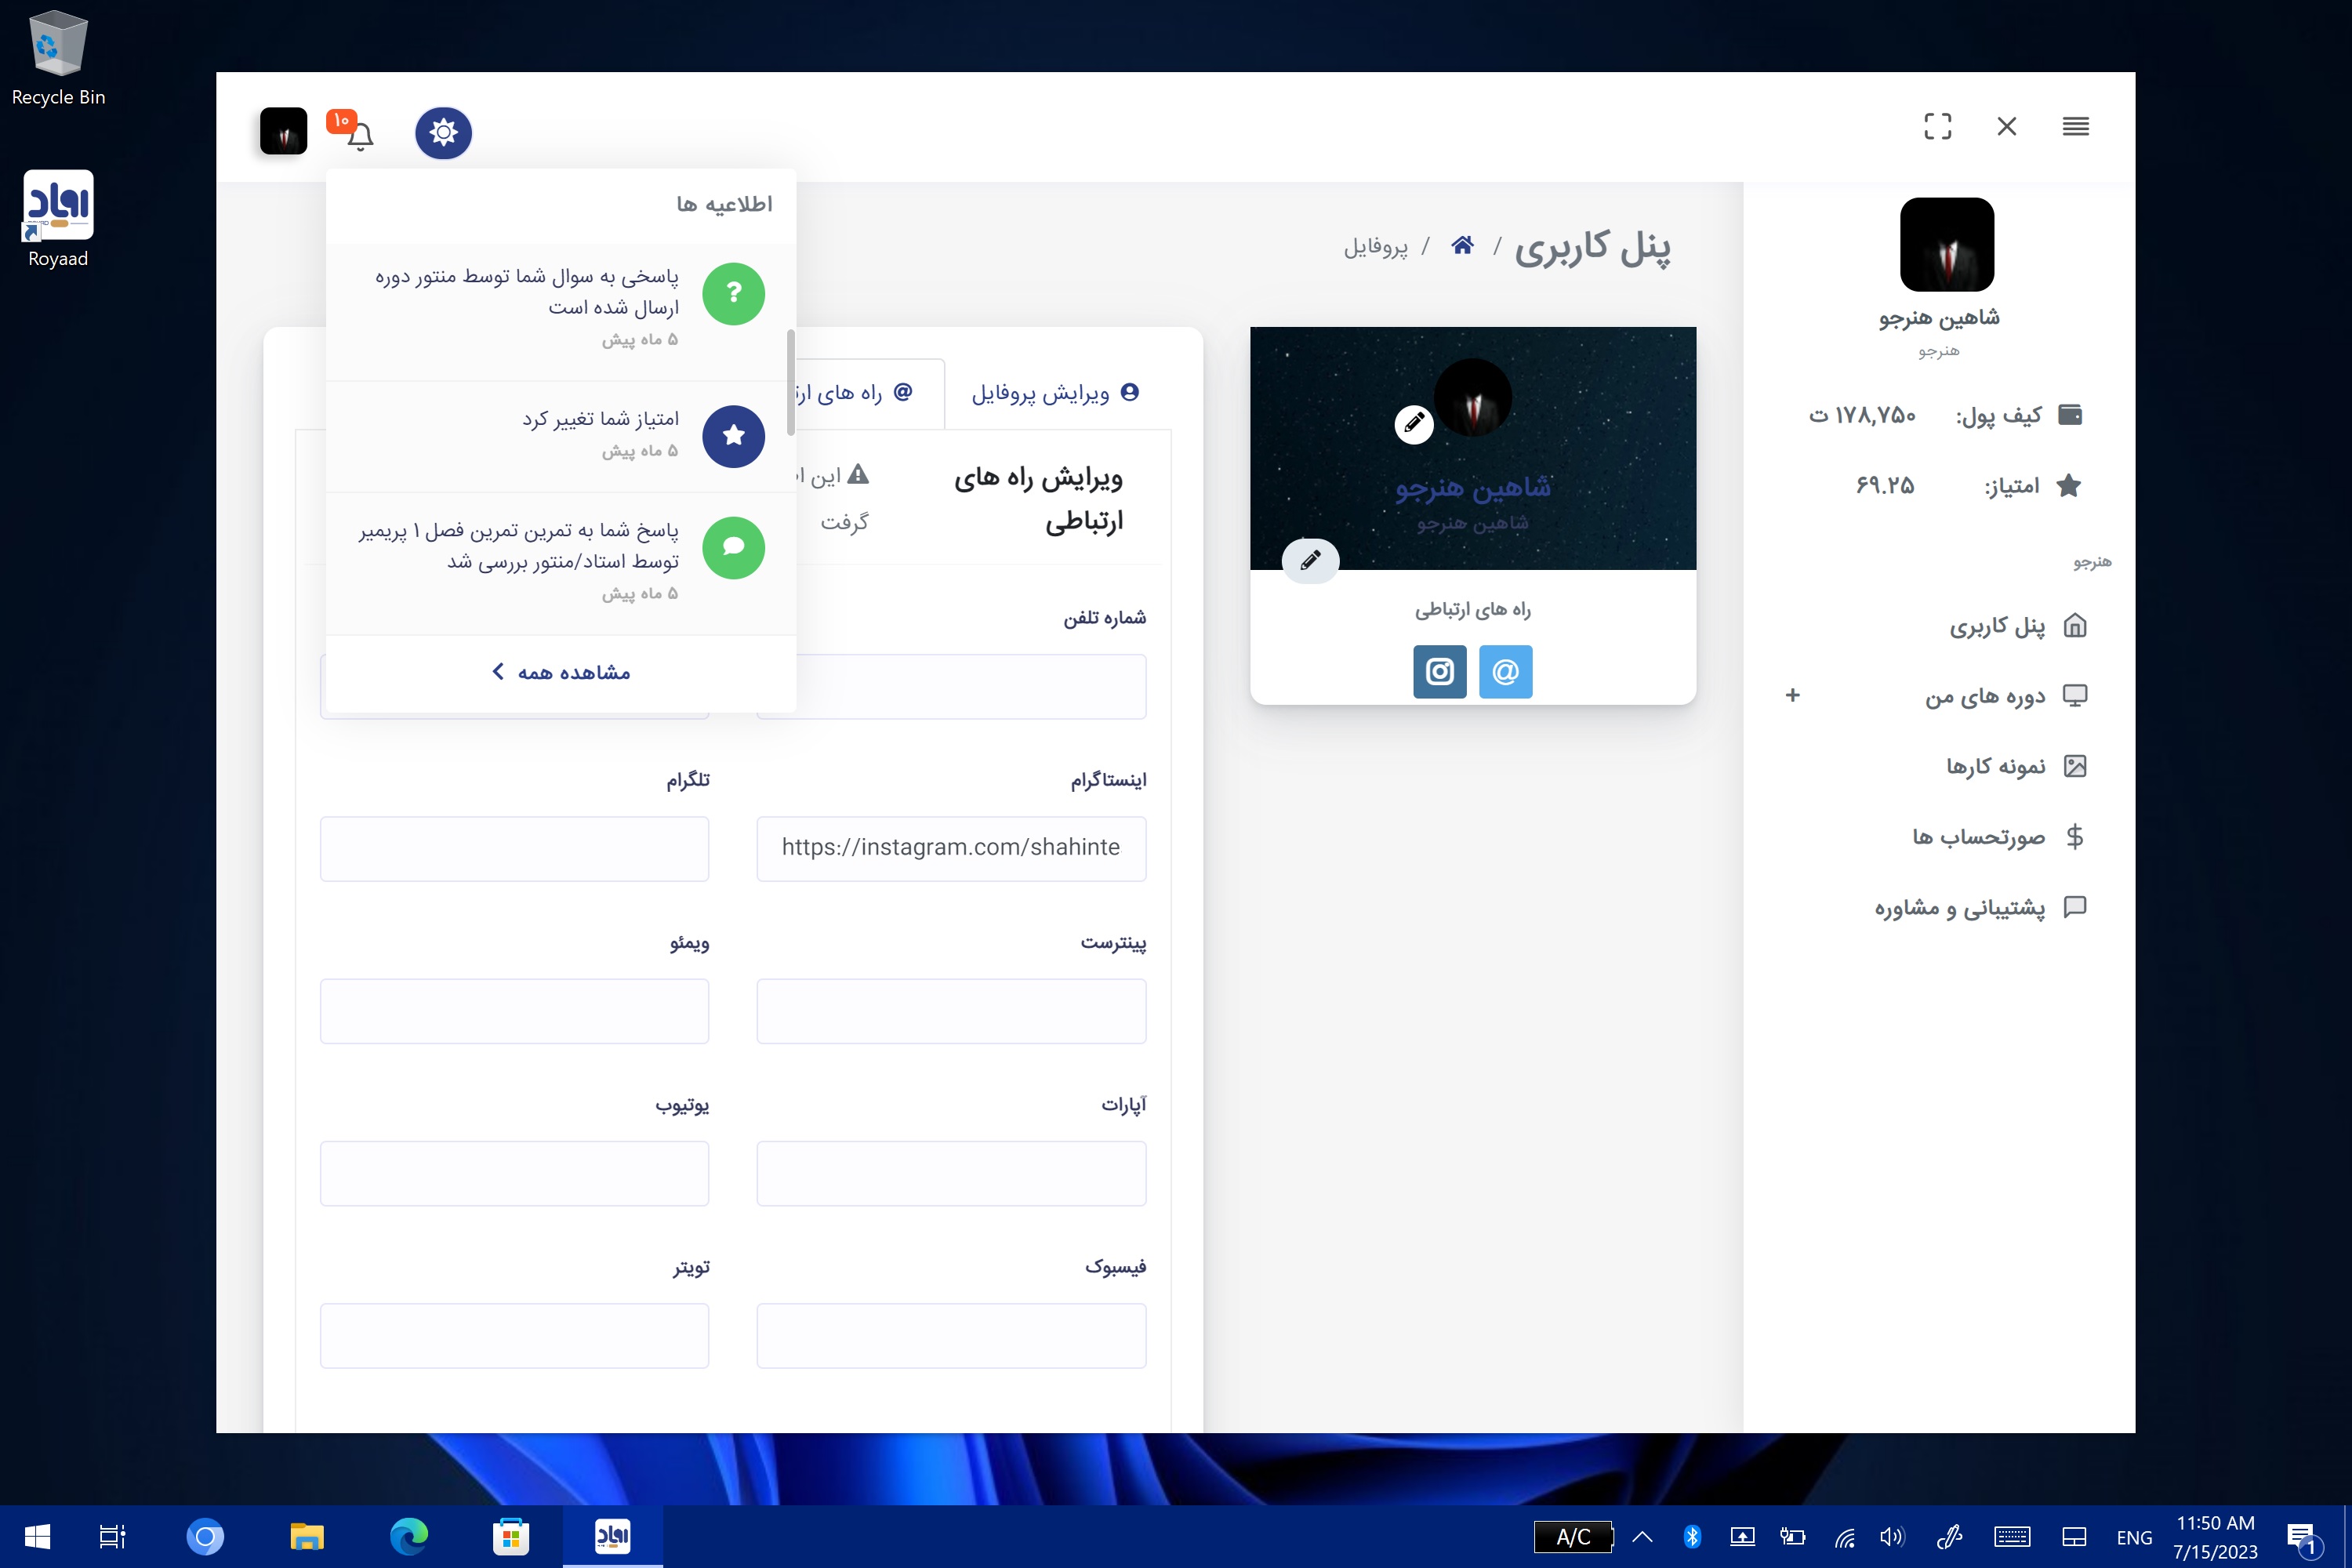 Shahinsoft.ir Royaad desktop application Notifications